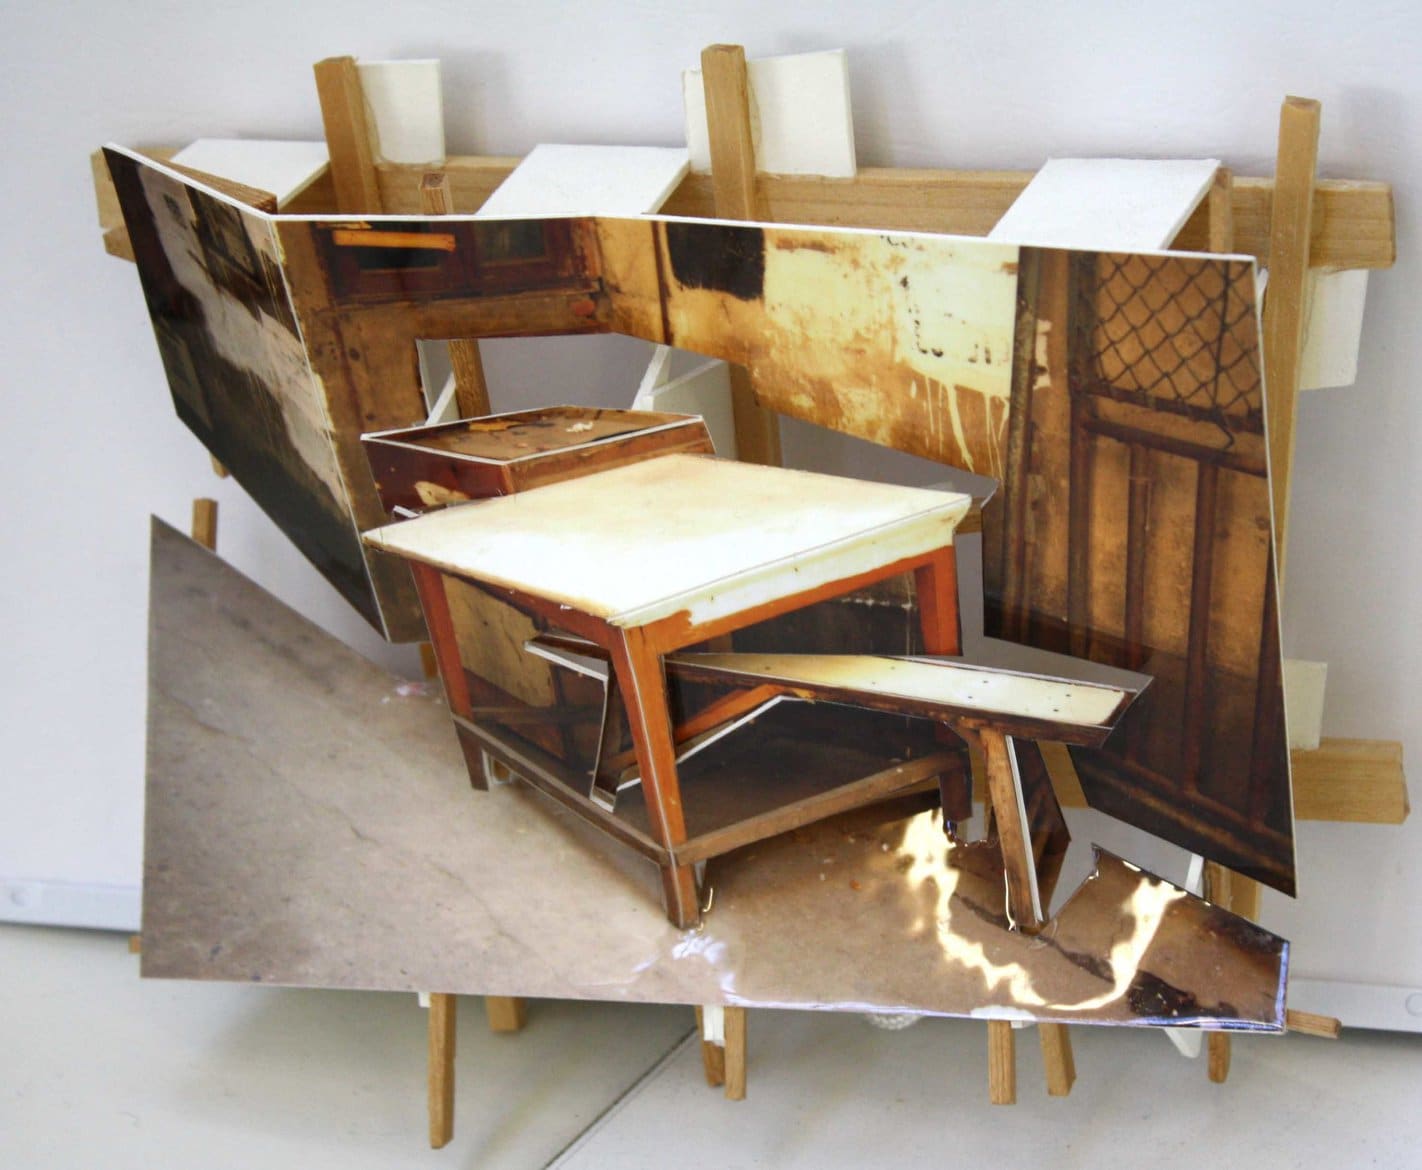 'Street Table', 2009, c-print, museum board, wood, 20 x 18 x 15cm